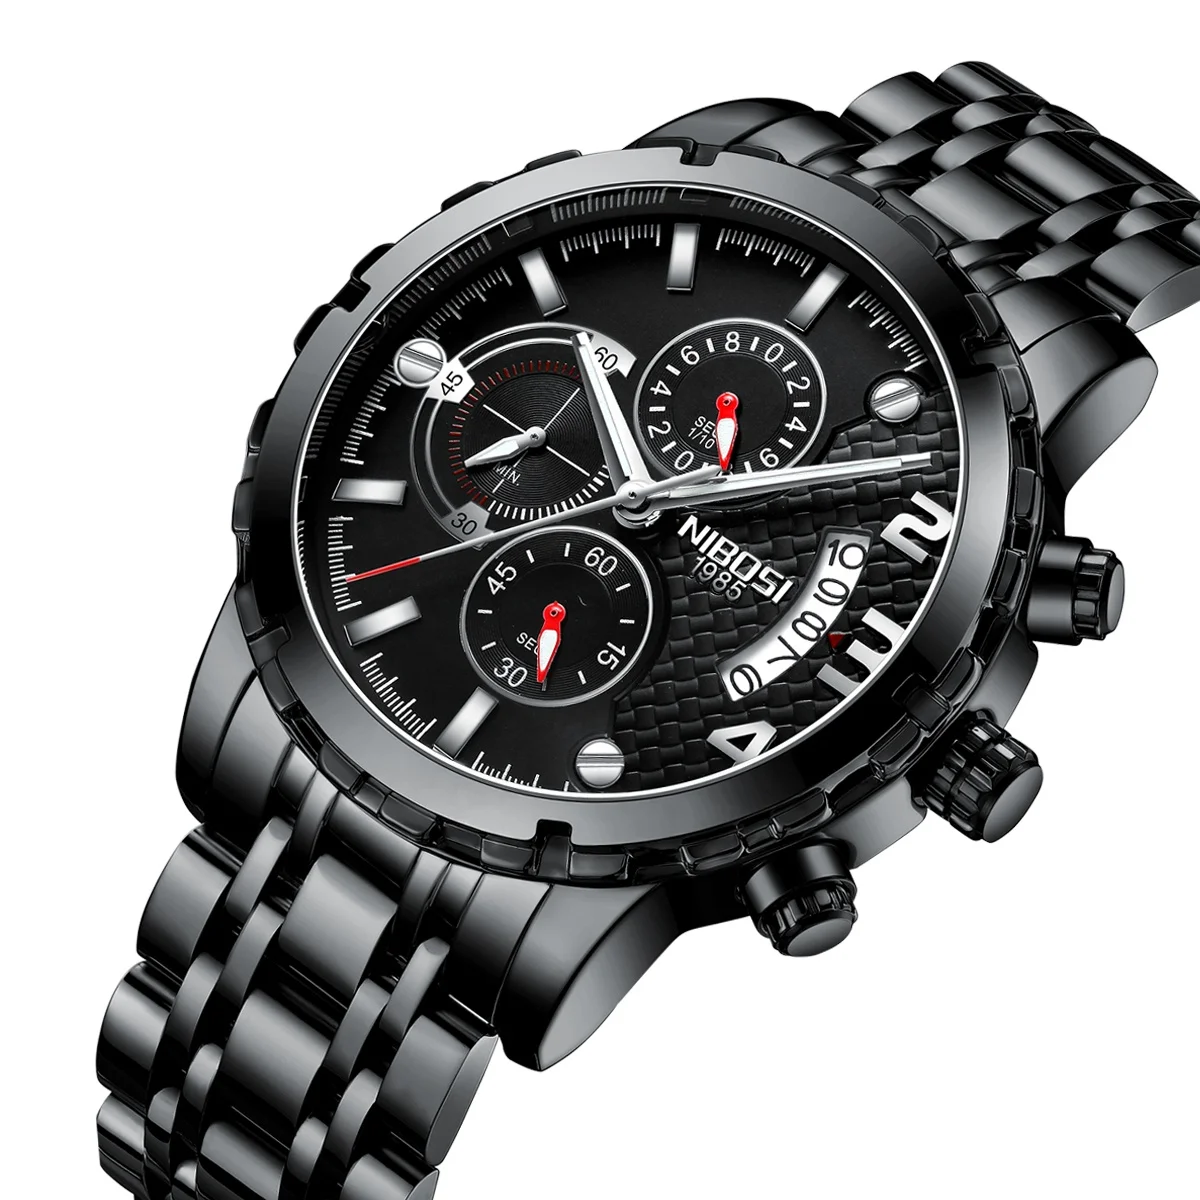 

wholesale NIBOSI 2356 Chronograph Men Watches Top Brand Luxury Sport/Military Watch Waterproof Stainless Steel Wrist Watch